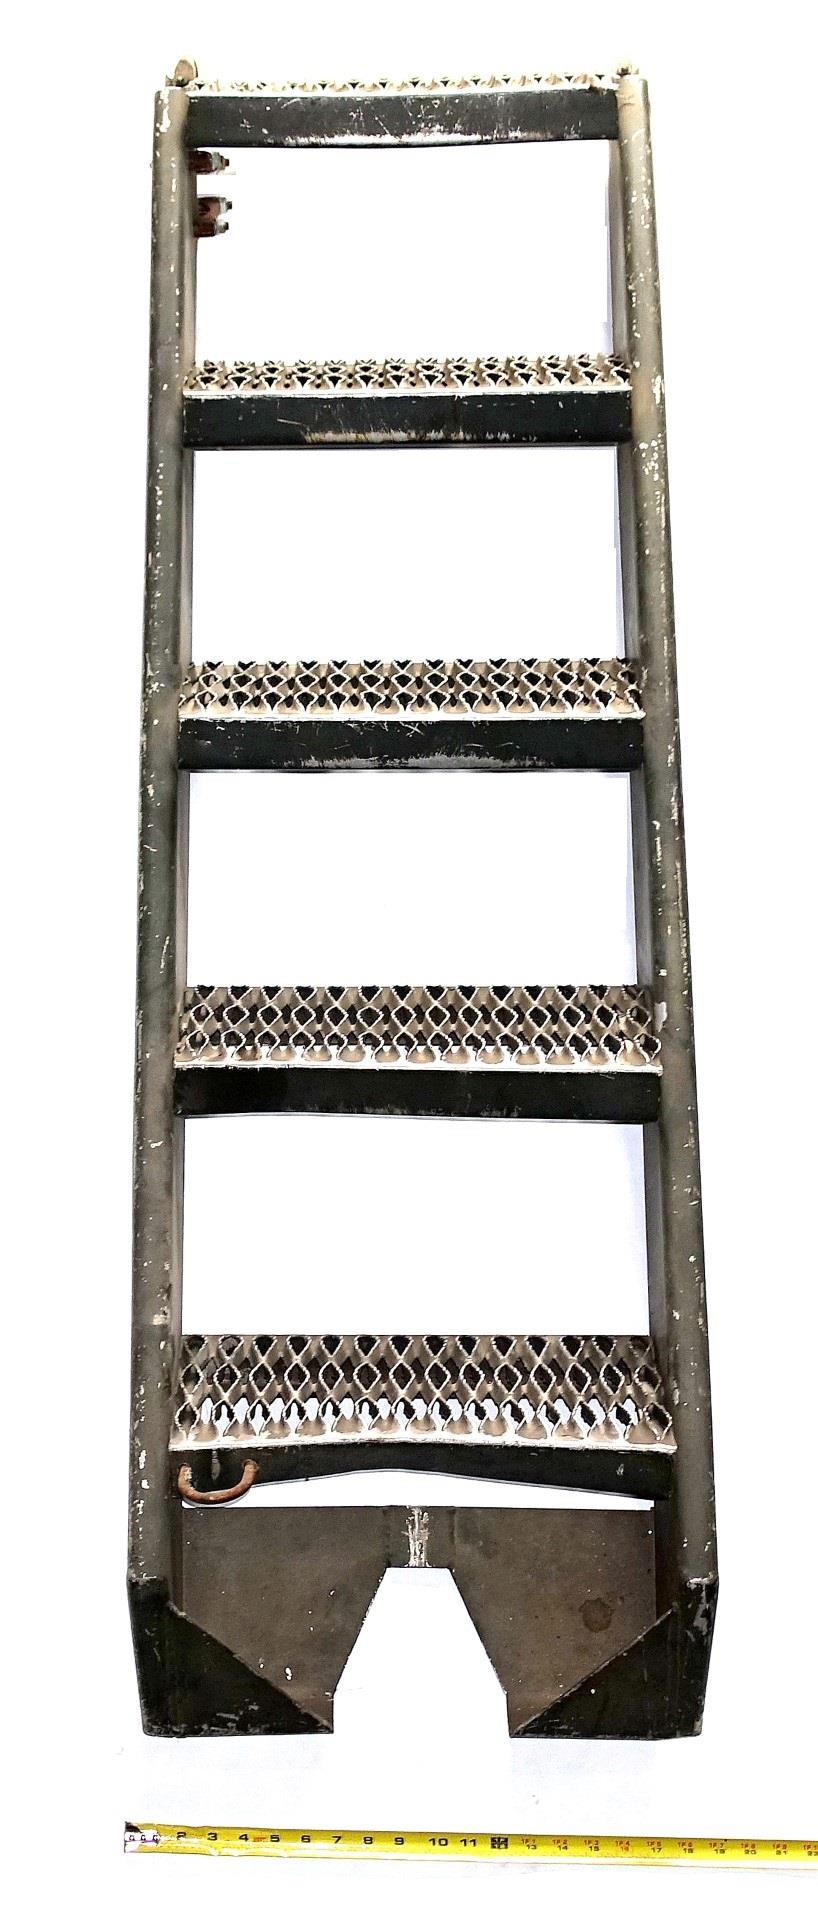 ALL-5213 | ALL-5213 5-Step Boarding Ladder (1) (Large).JPG